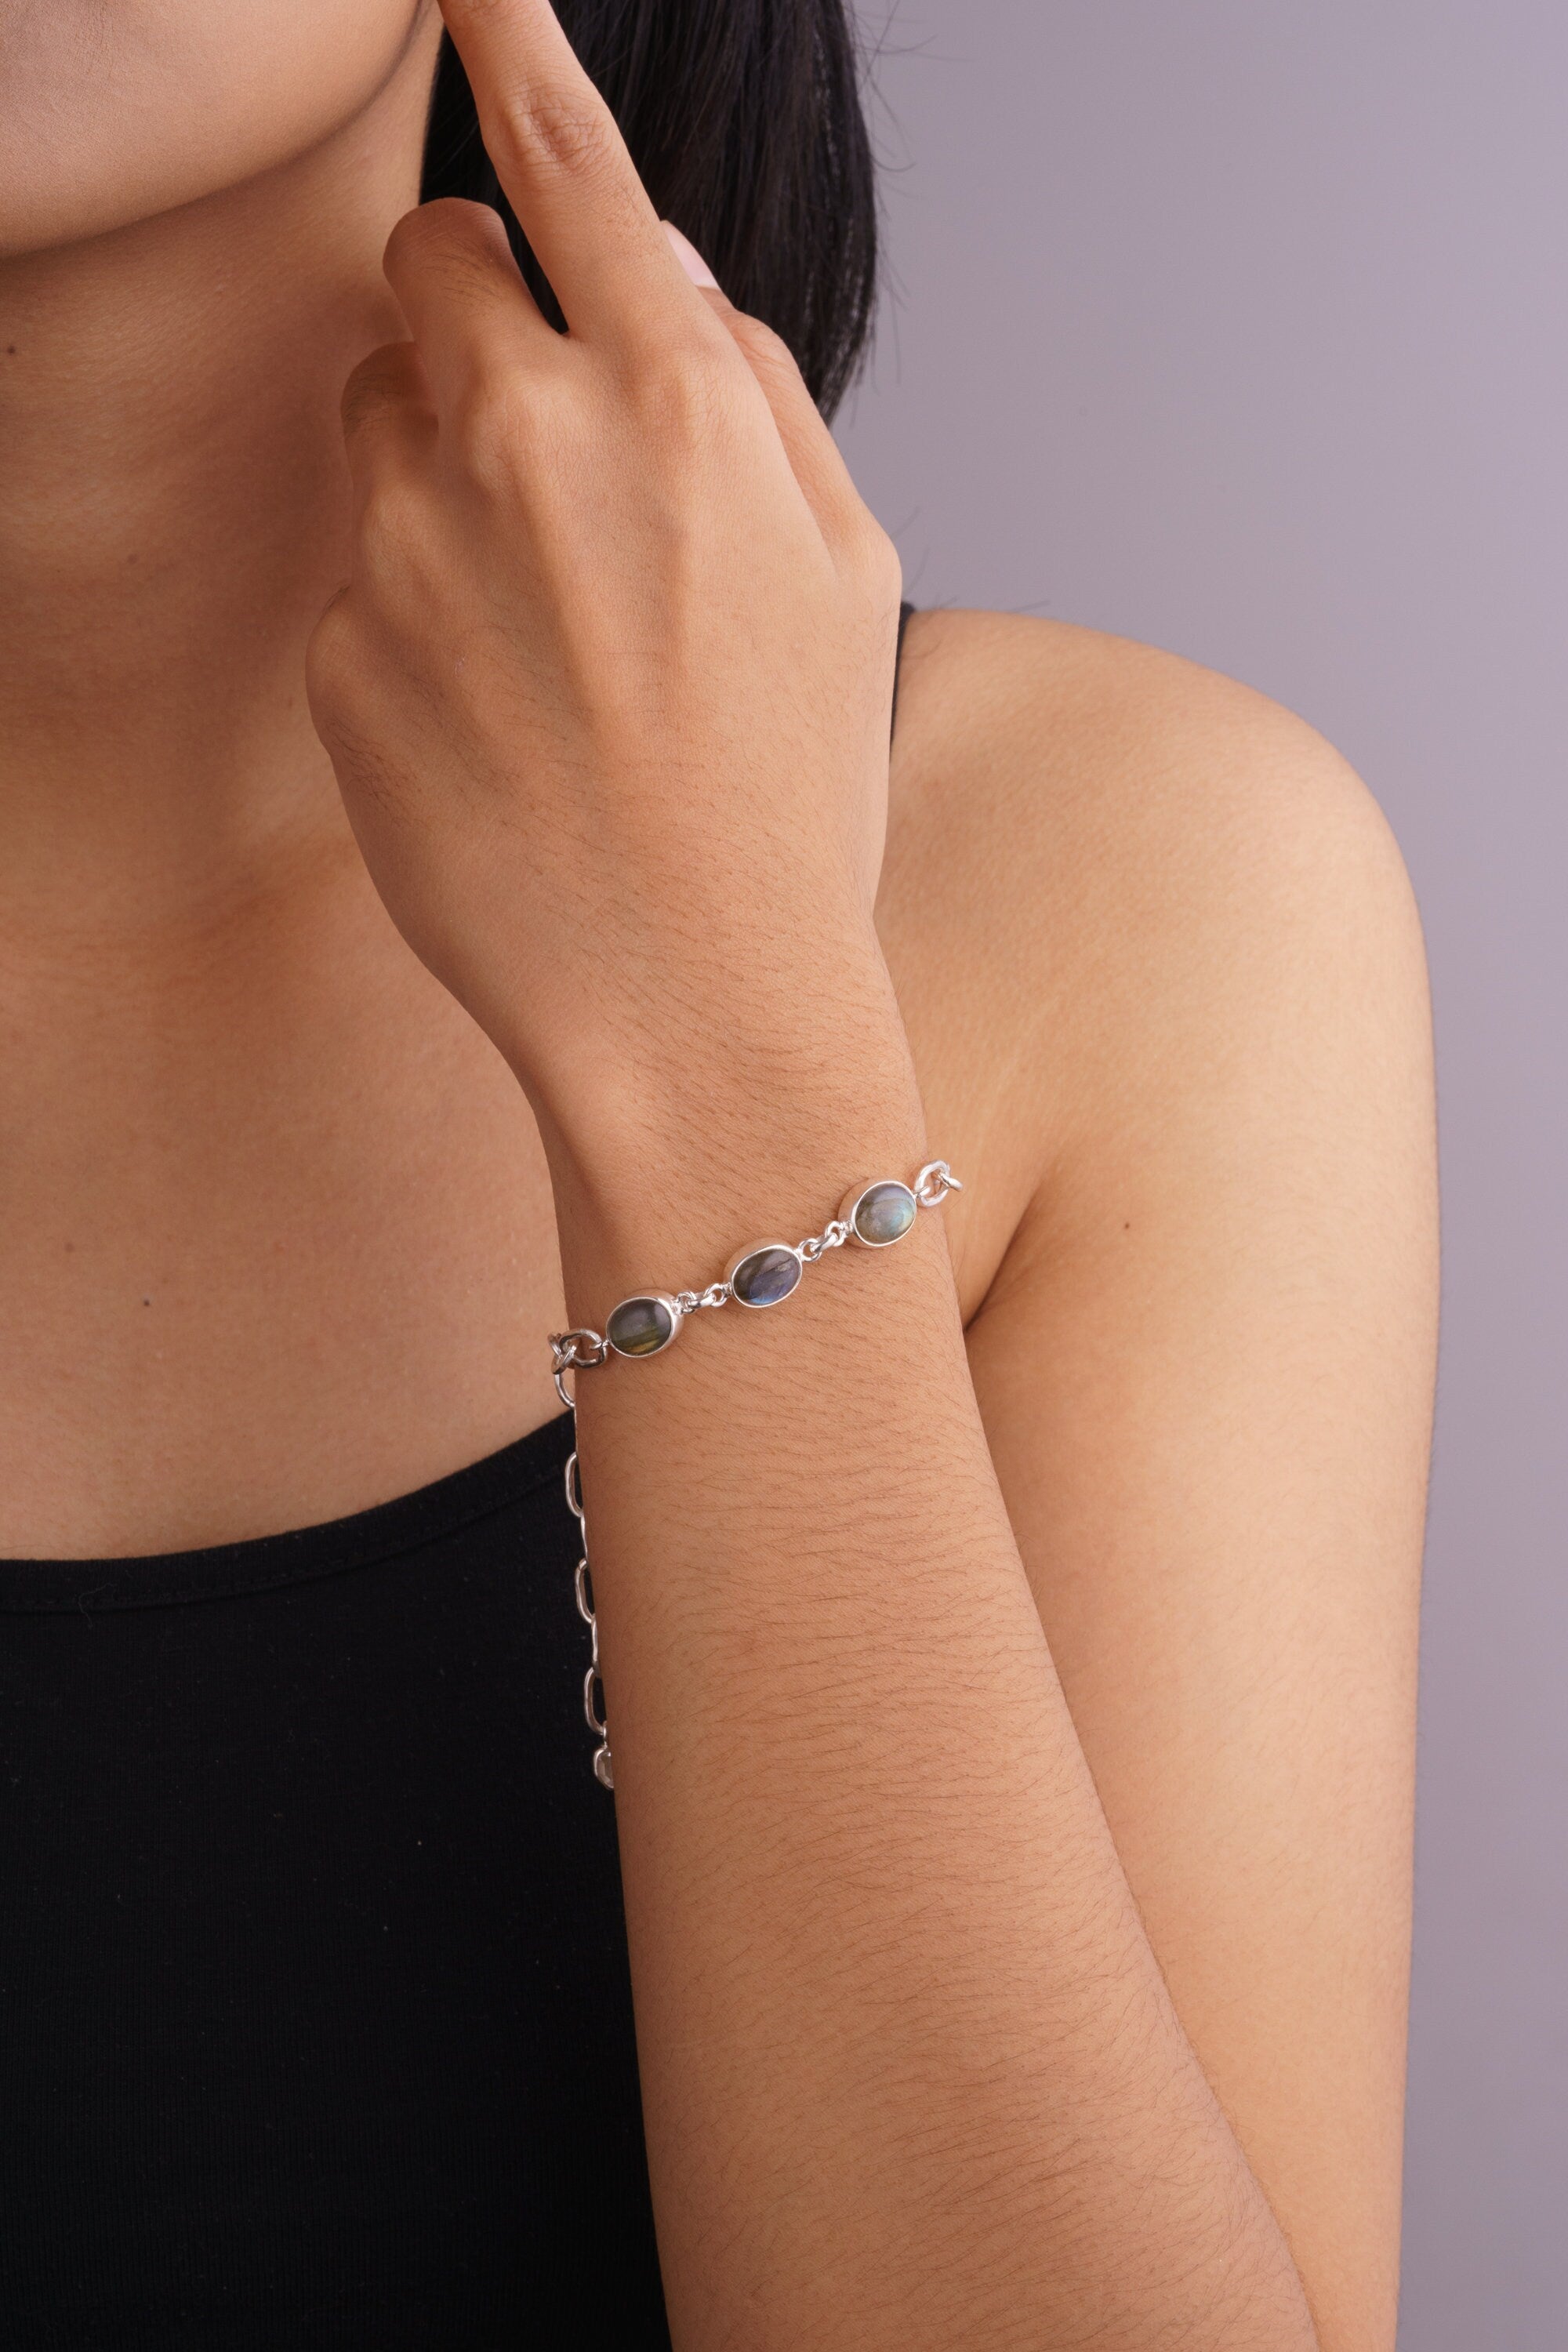 Luminous Labradorite Link Bracelet: Three Labradorite & Herkimer Diamond - Sterling Silver - Shiny and Polish Finish